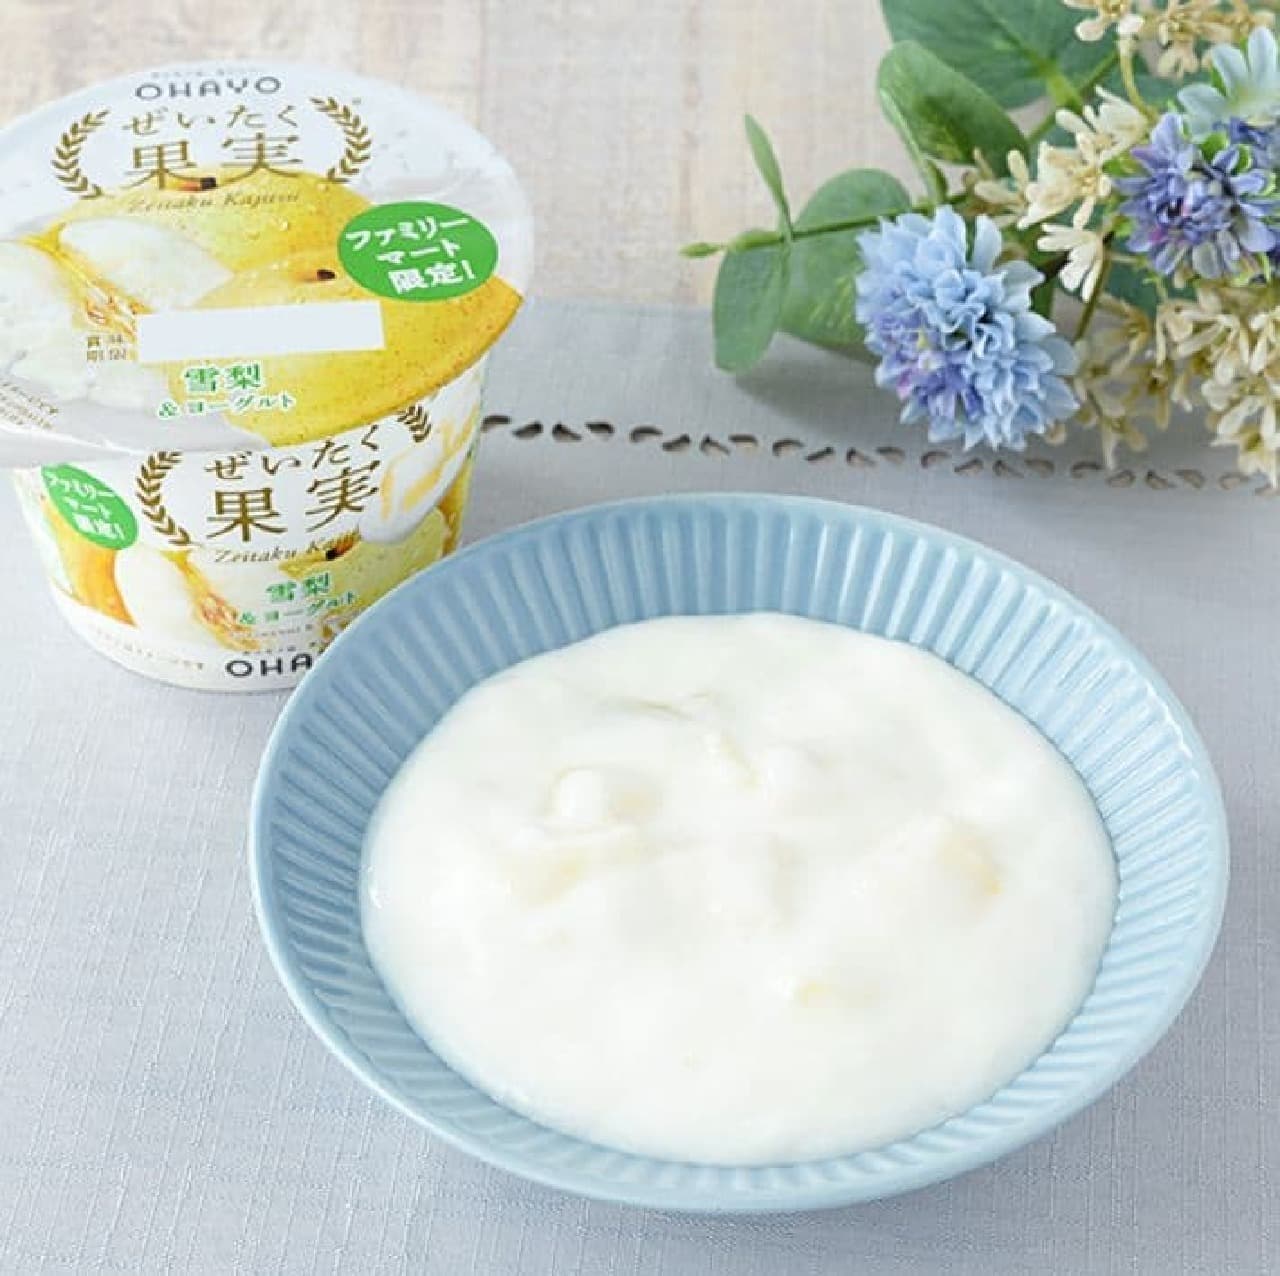 FamilyMart "Luxurious Fruits: Snow Pear & Yogurt